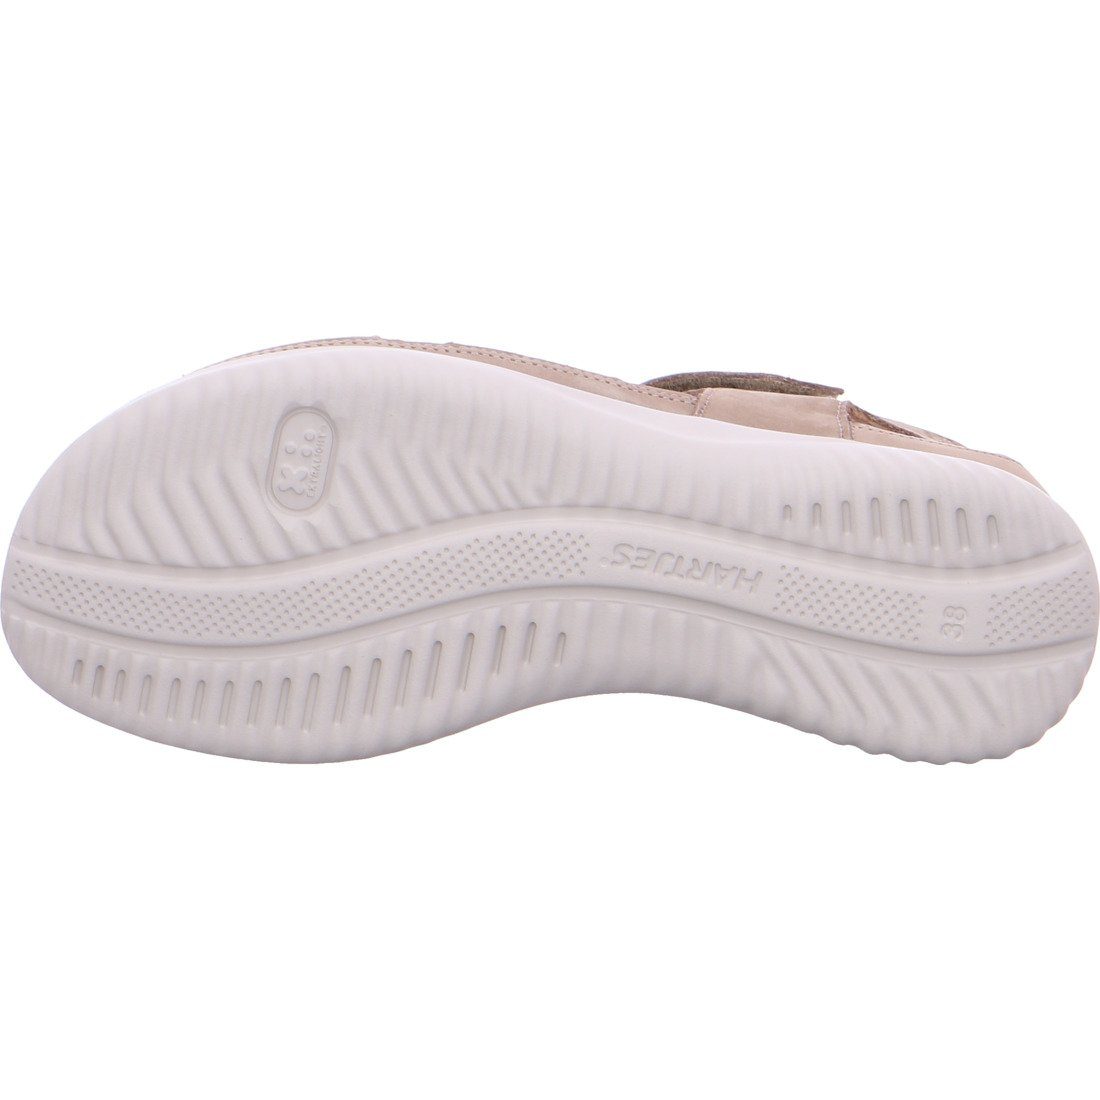 Schuhe, Breeze Sandalette Hartjes 042615 Hartjes Sandalette Damen - Nubuk braun